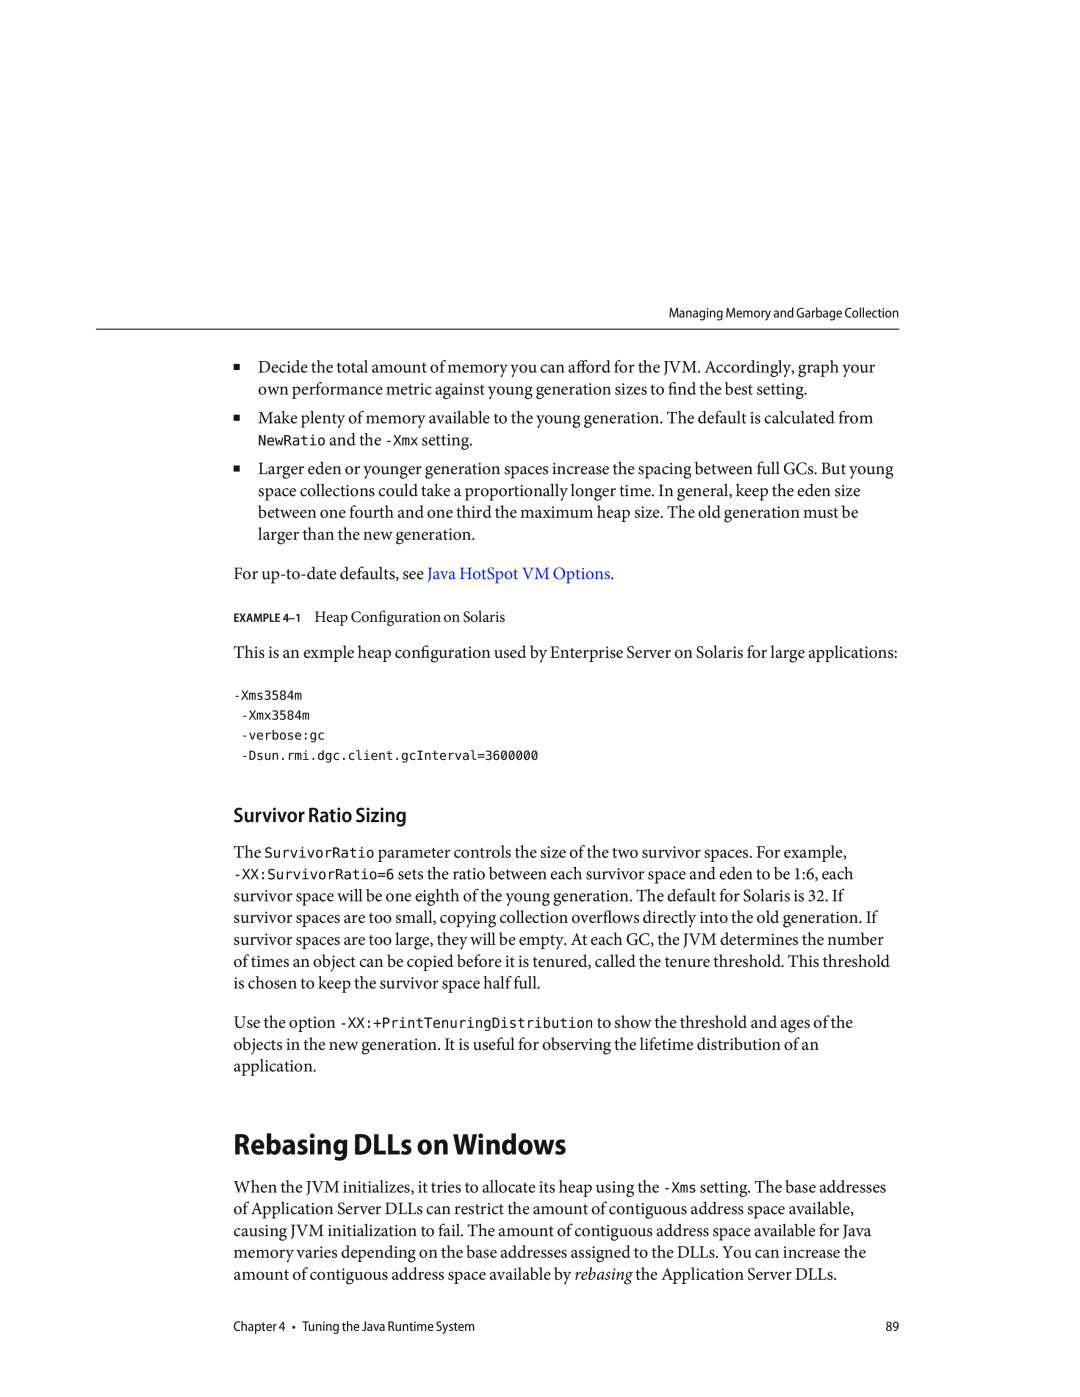 Sun Microsystems 820434310 manual Rebasing DLLs on Windows, Survivor Ratio Sizing 